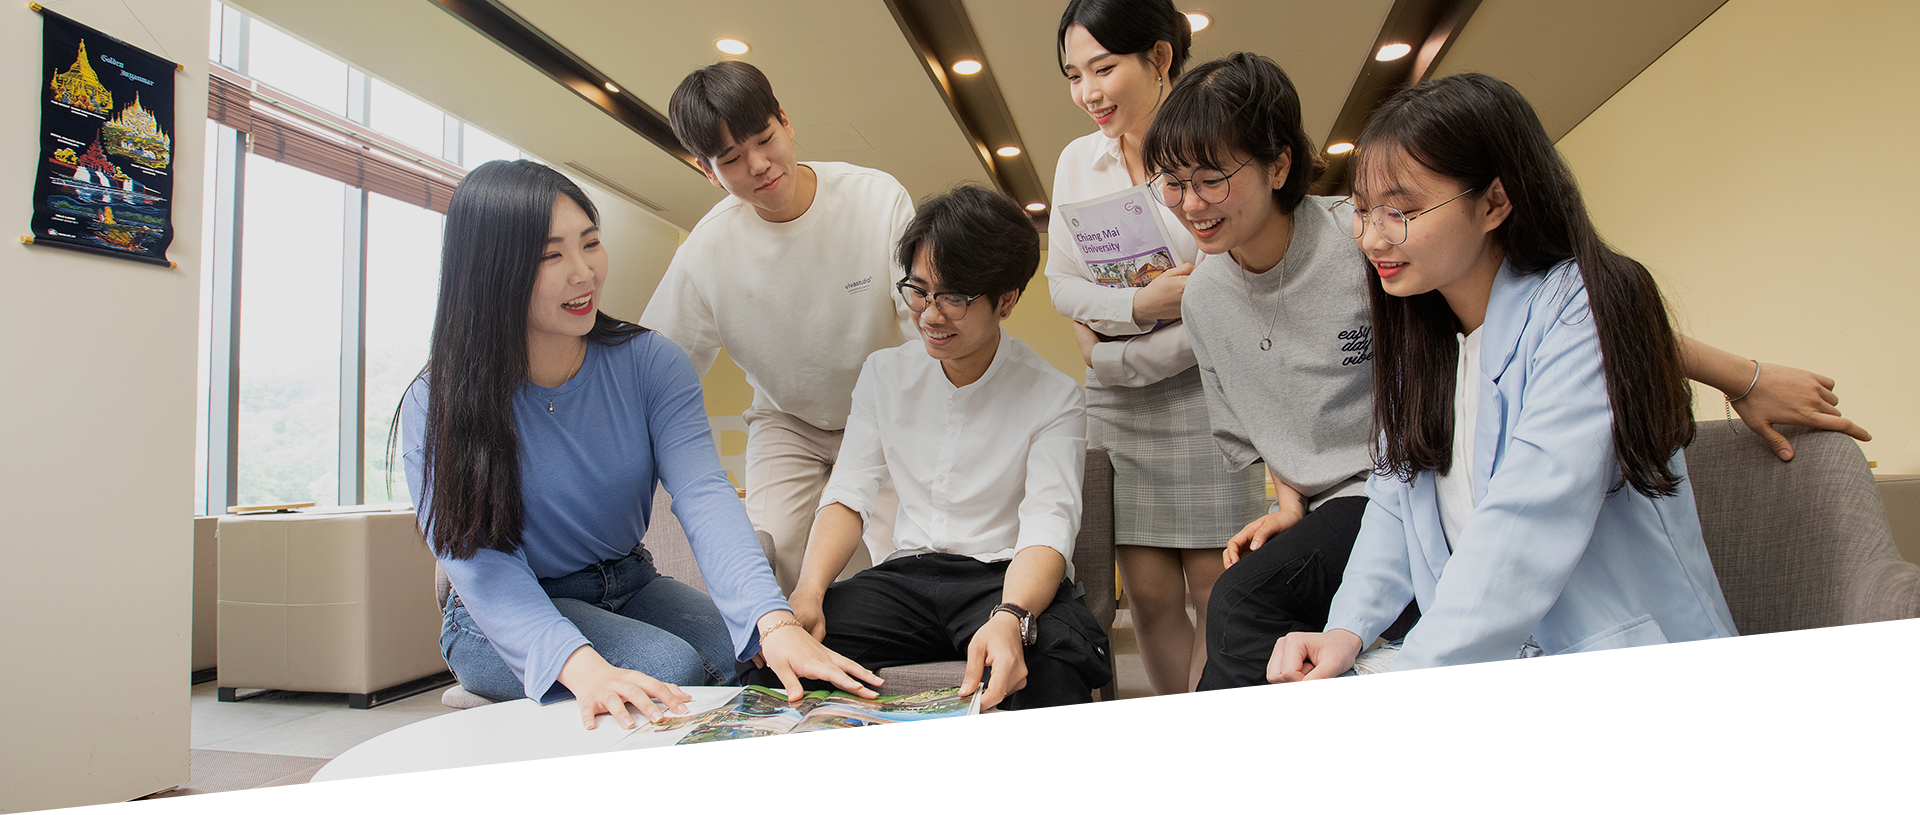 Daejeon University - the new standard for future universities